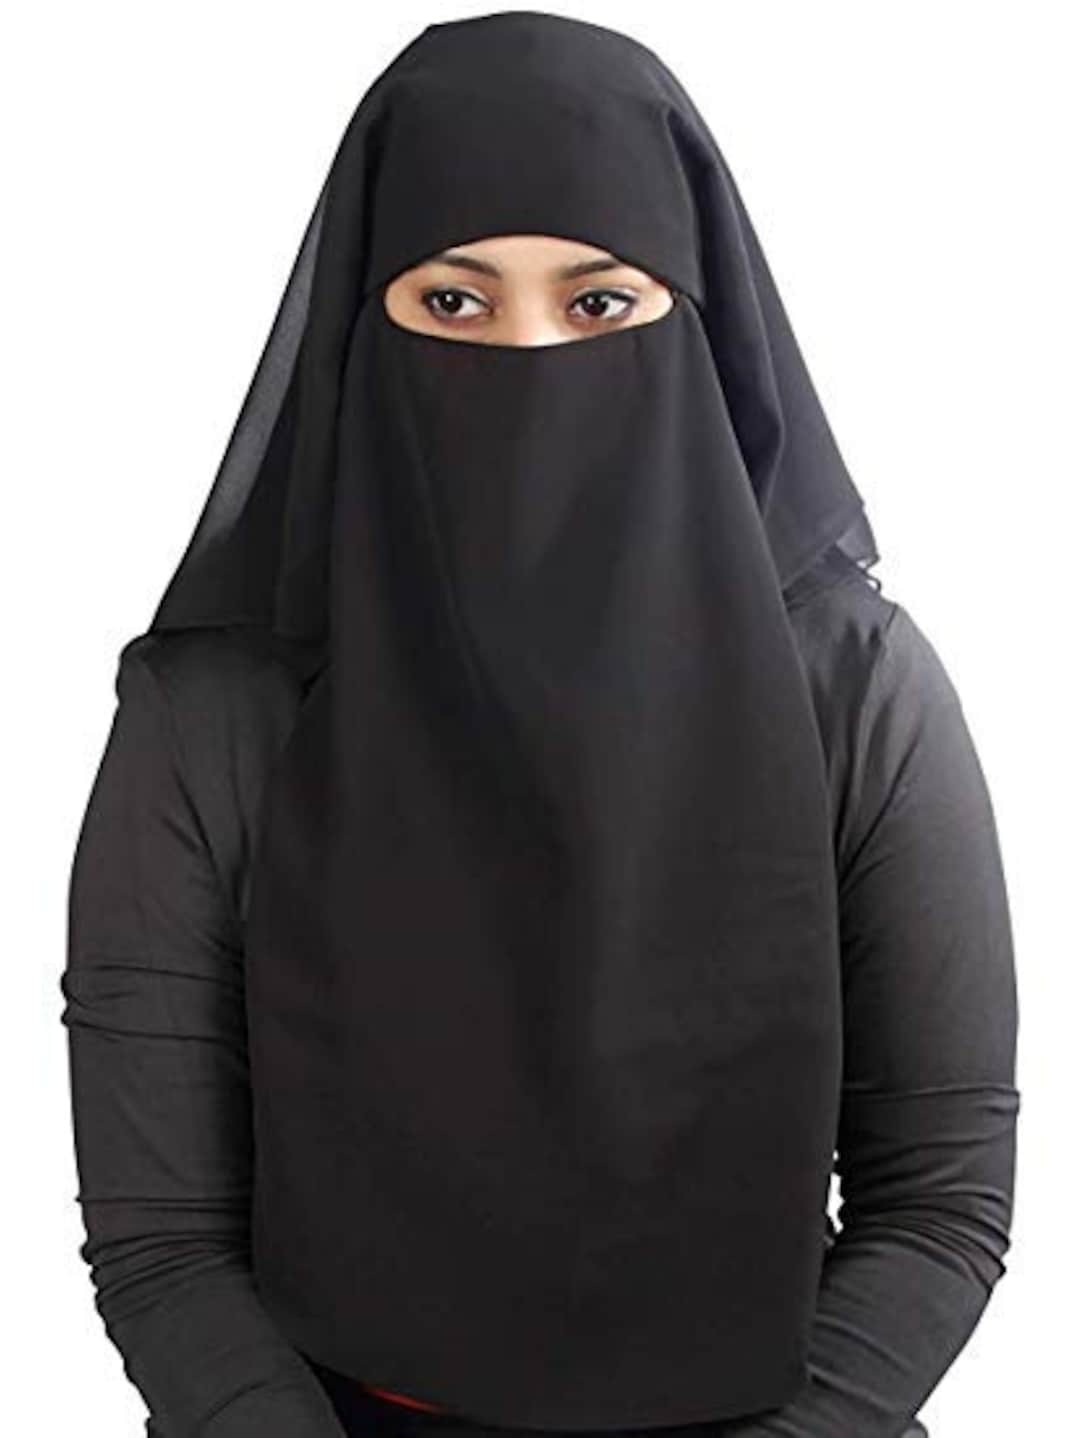 Layer Niqab Abaya Jilbab Khimar Burqa Head Scarf Face Cover Black Face Veil New Wedding Arab